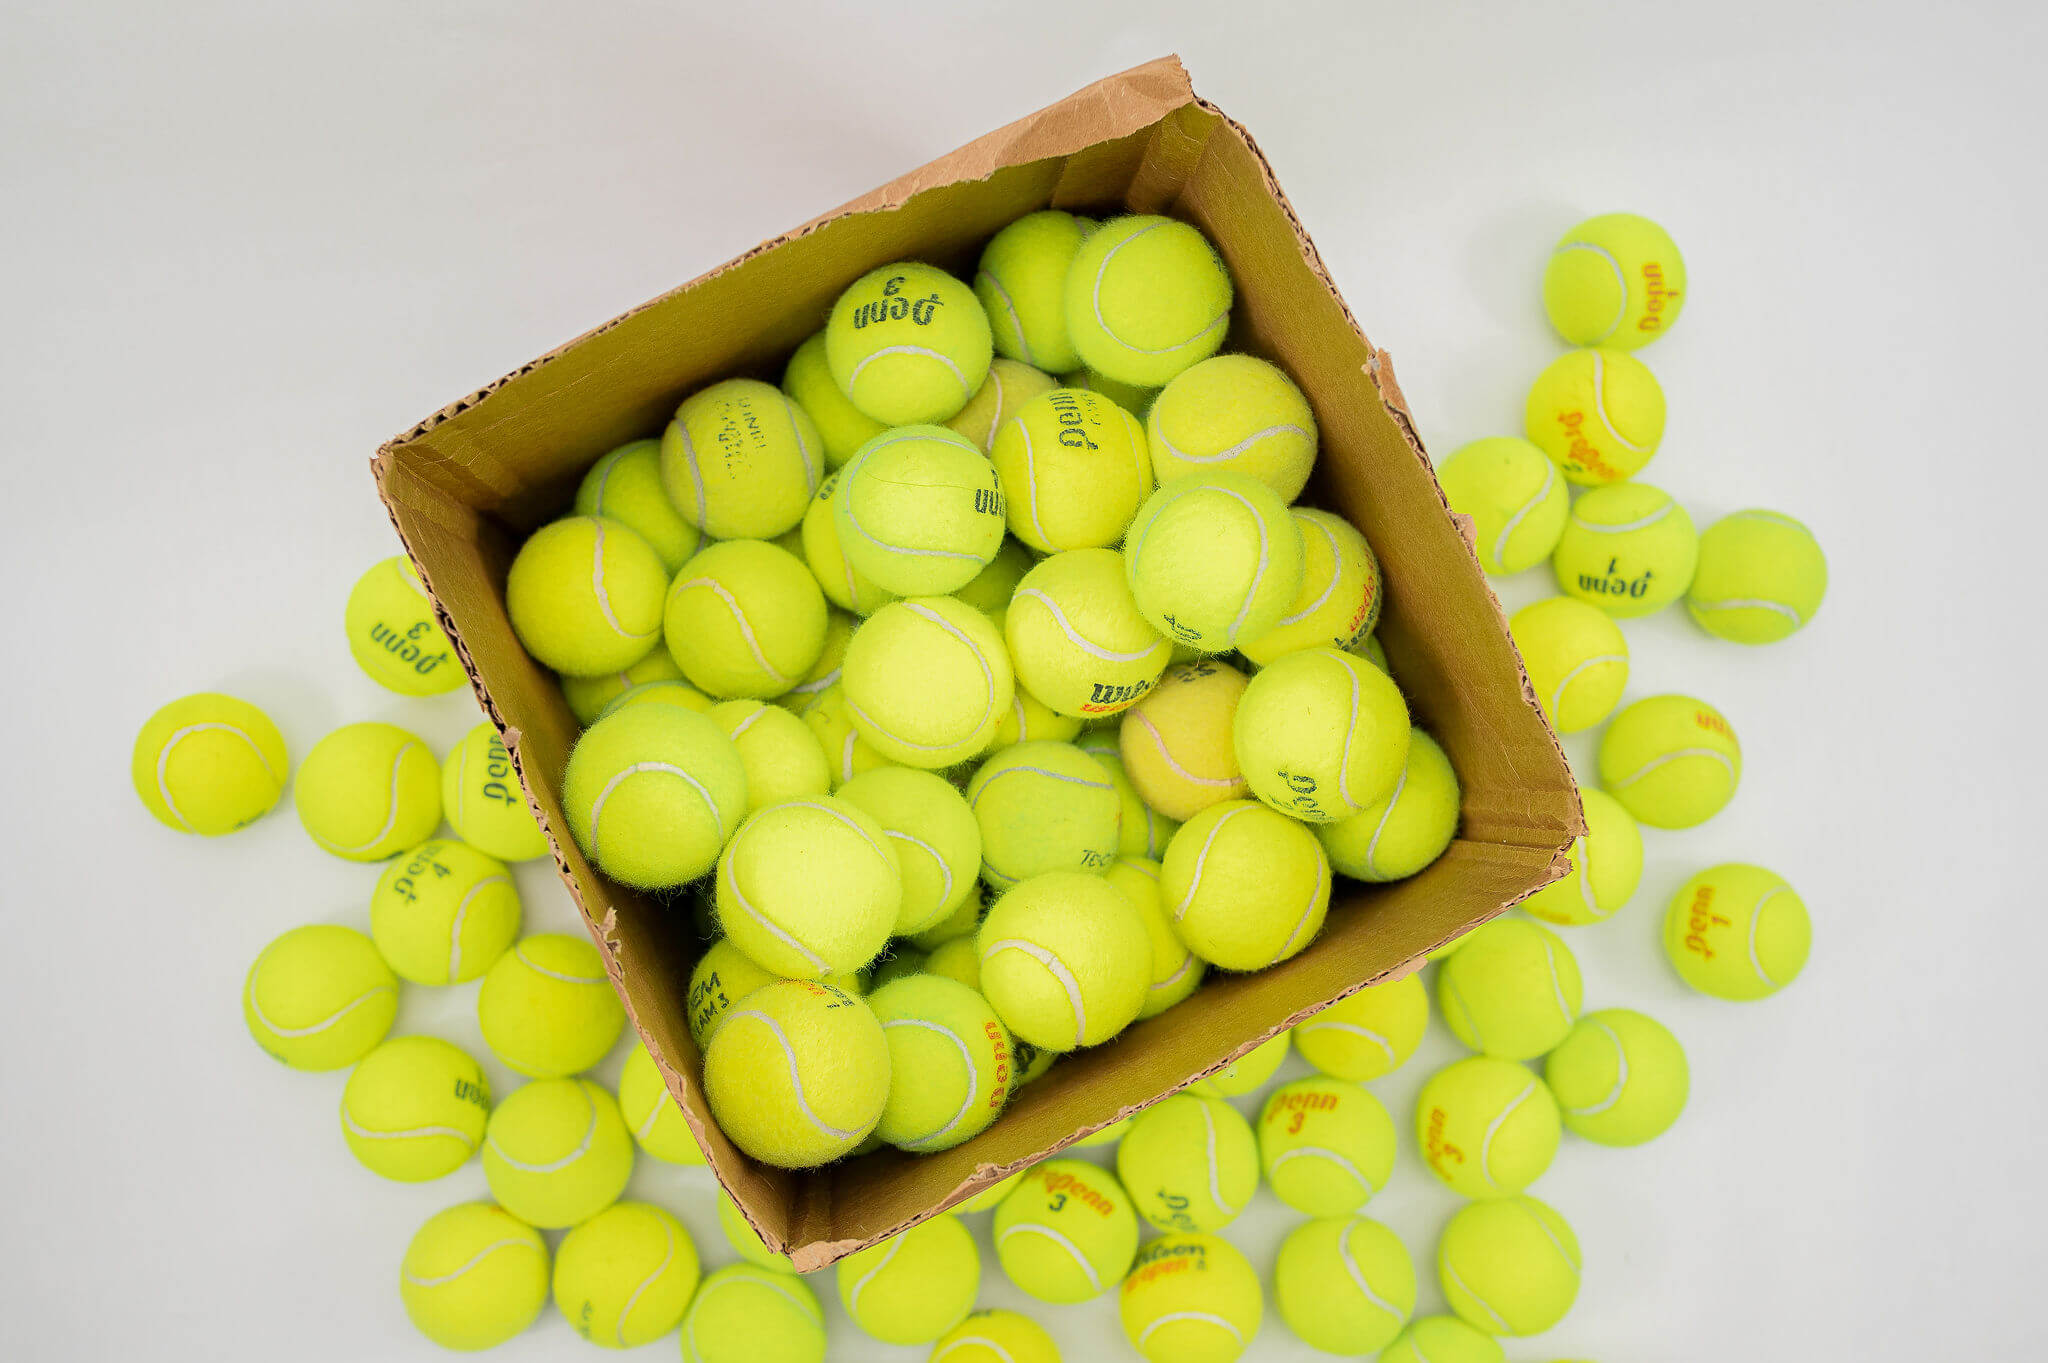 Gently Used Tennis Balls in a Cardboard Box